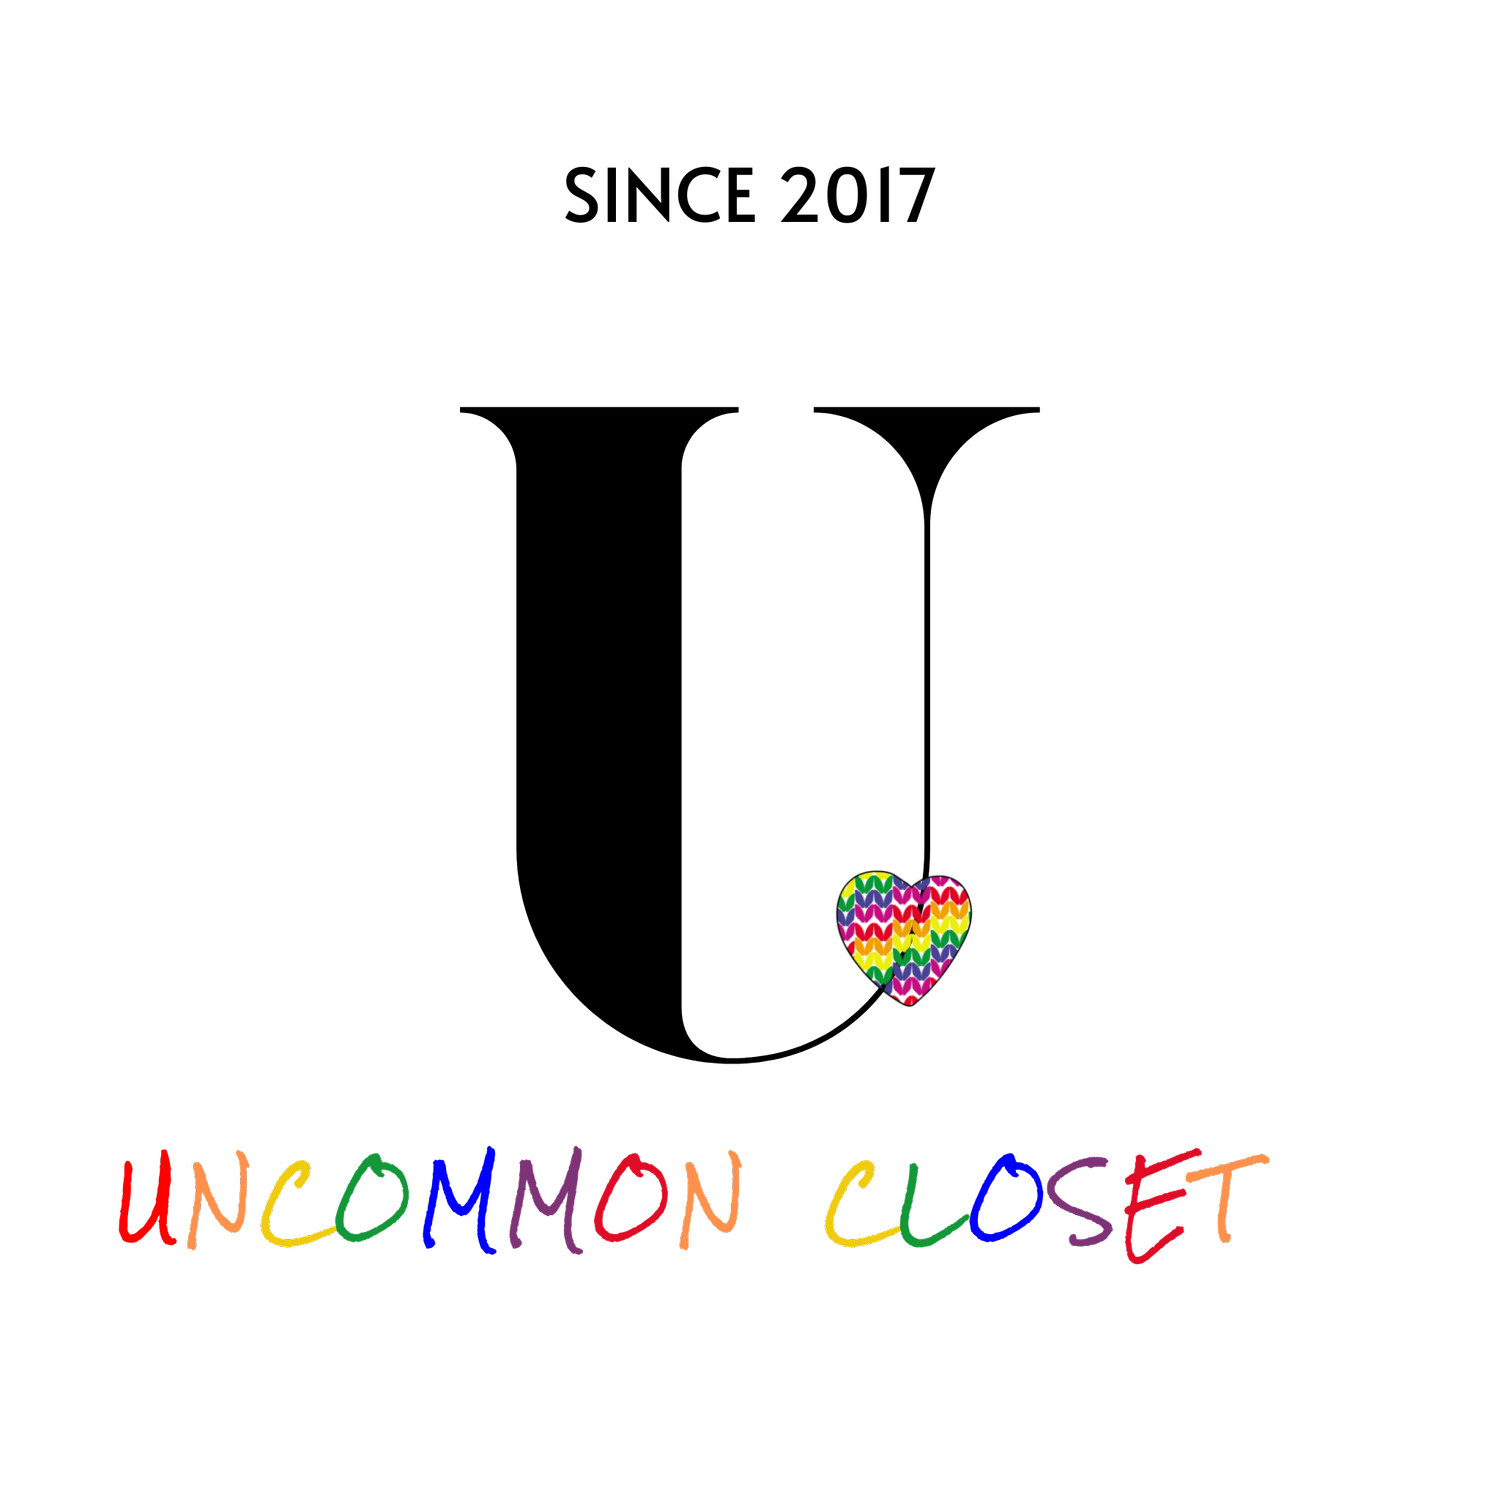 Uncommon Closet